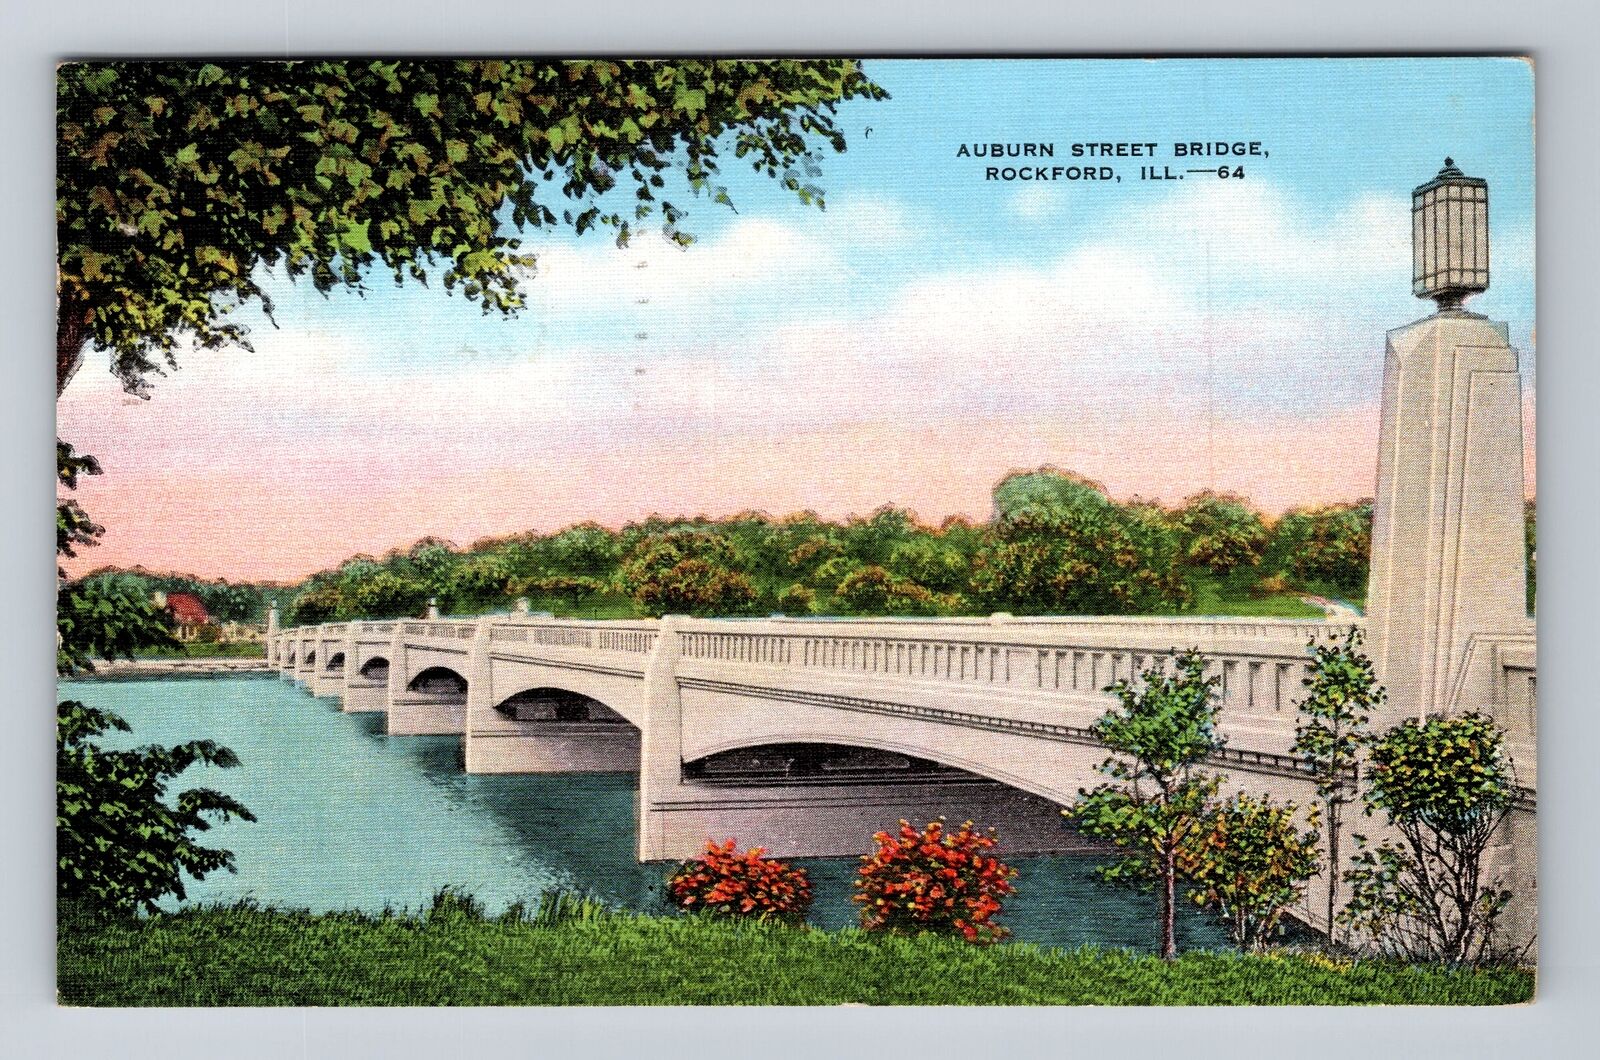 Rockford IL-Illinois, Scenic Auburn Street Bridge Antique Vintage c1941 Postcard